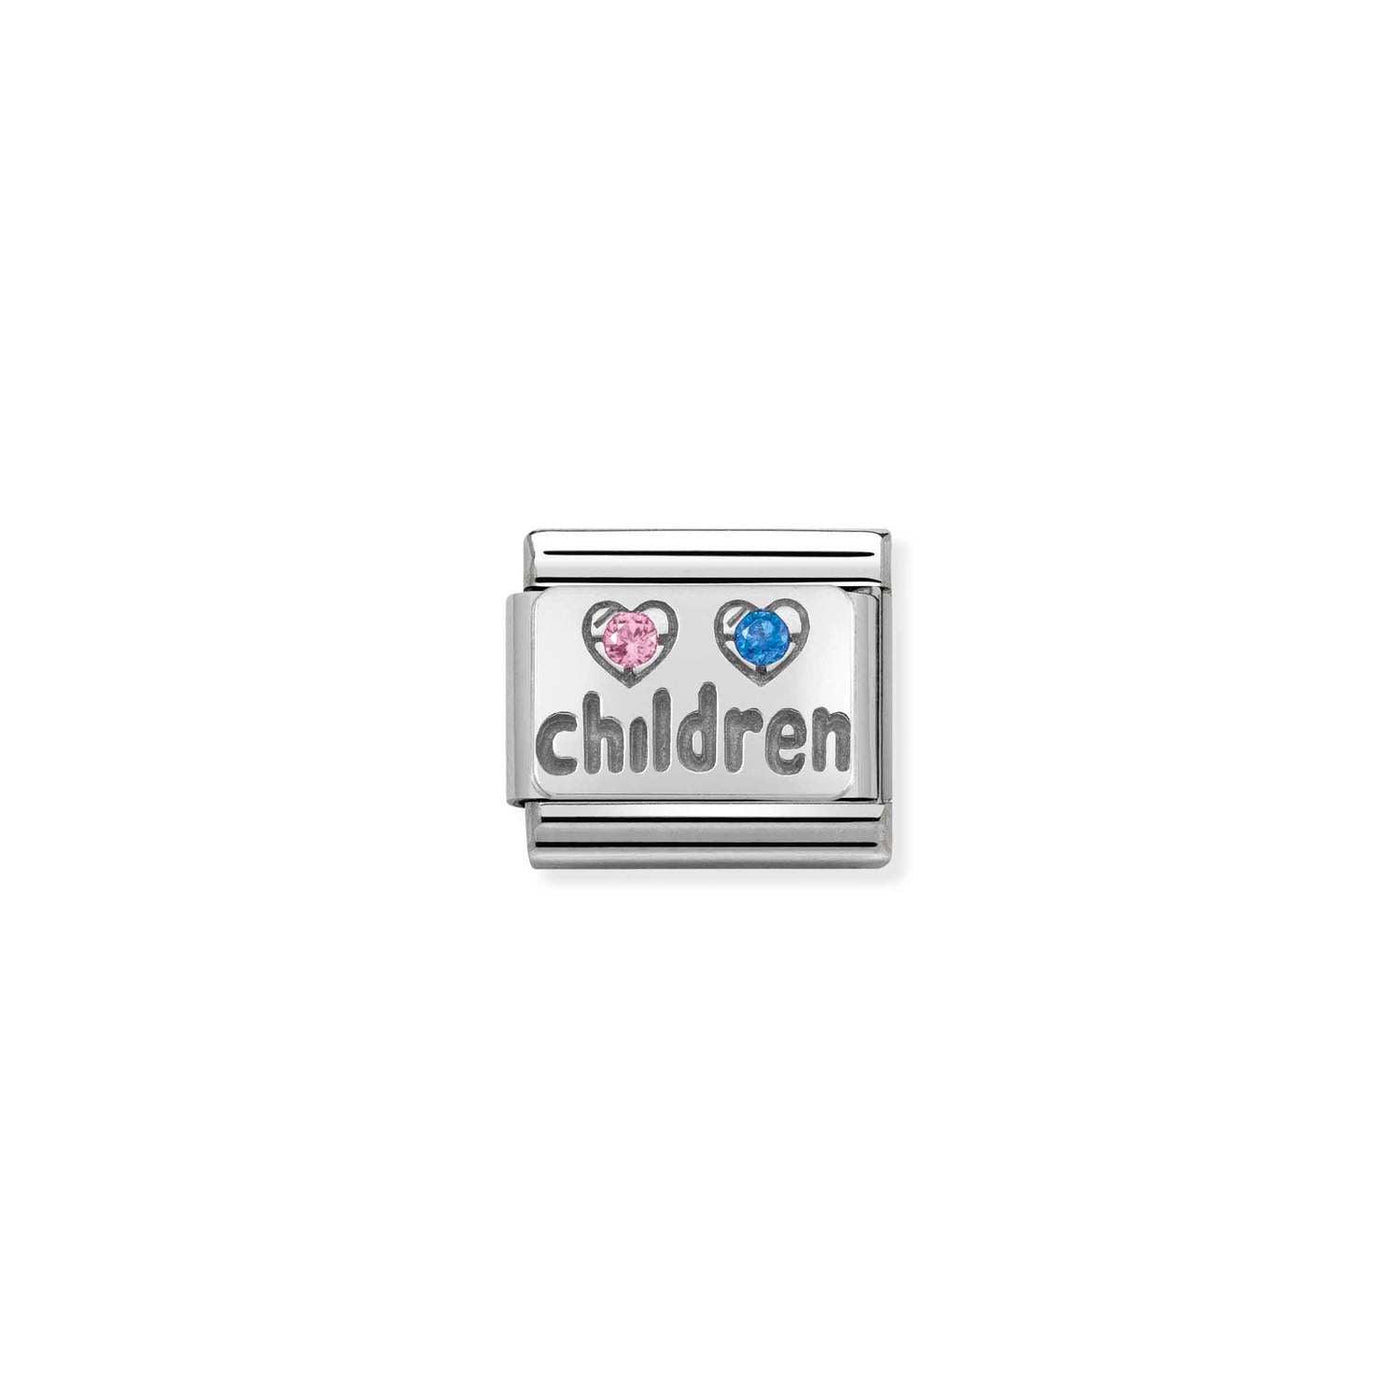 Nomination Silvershine Children Charm - Rococo Jewellery